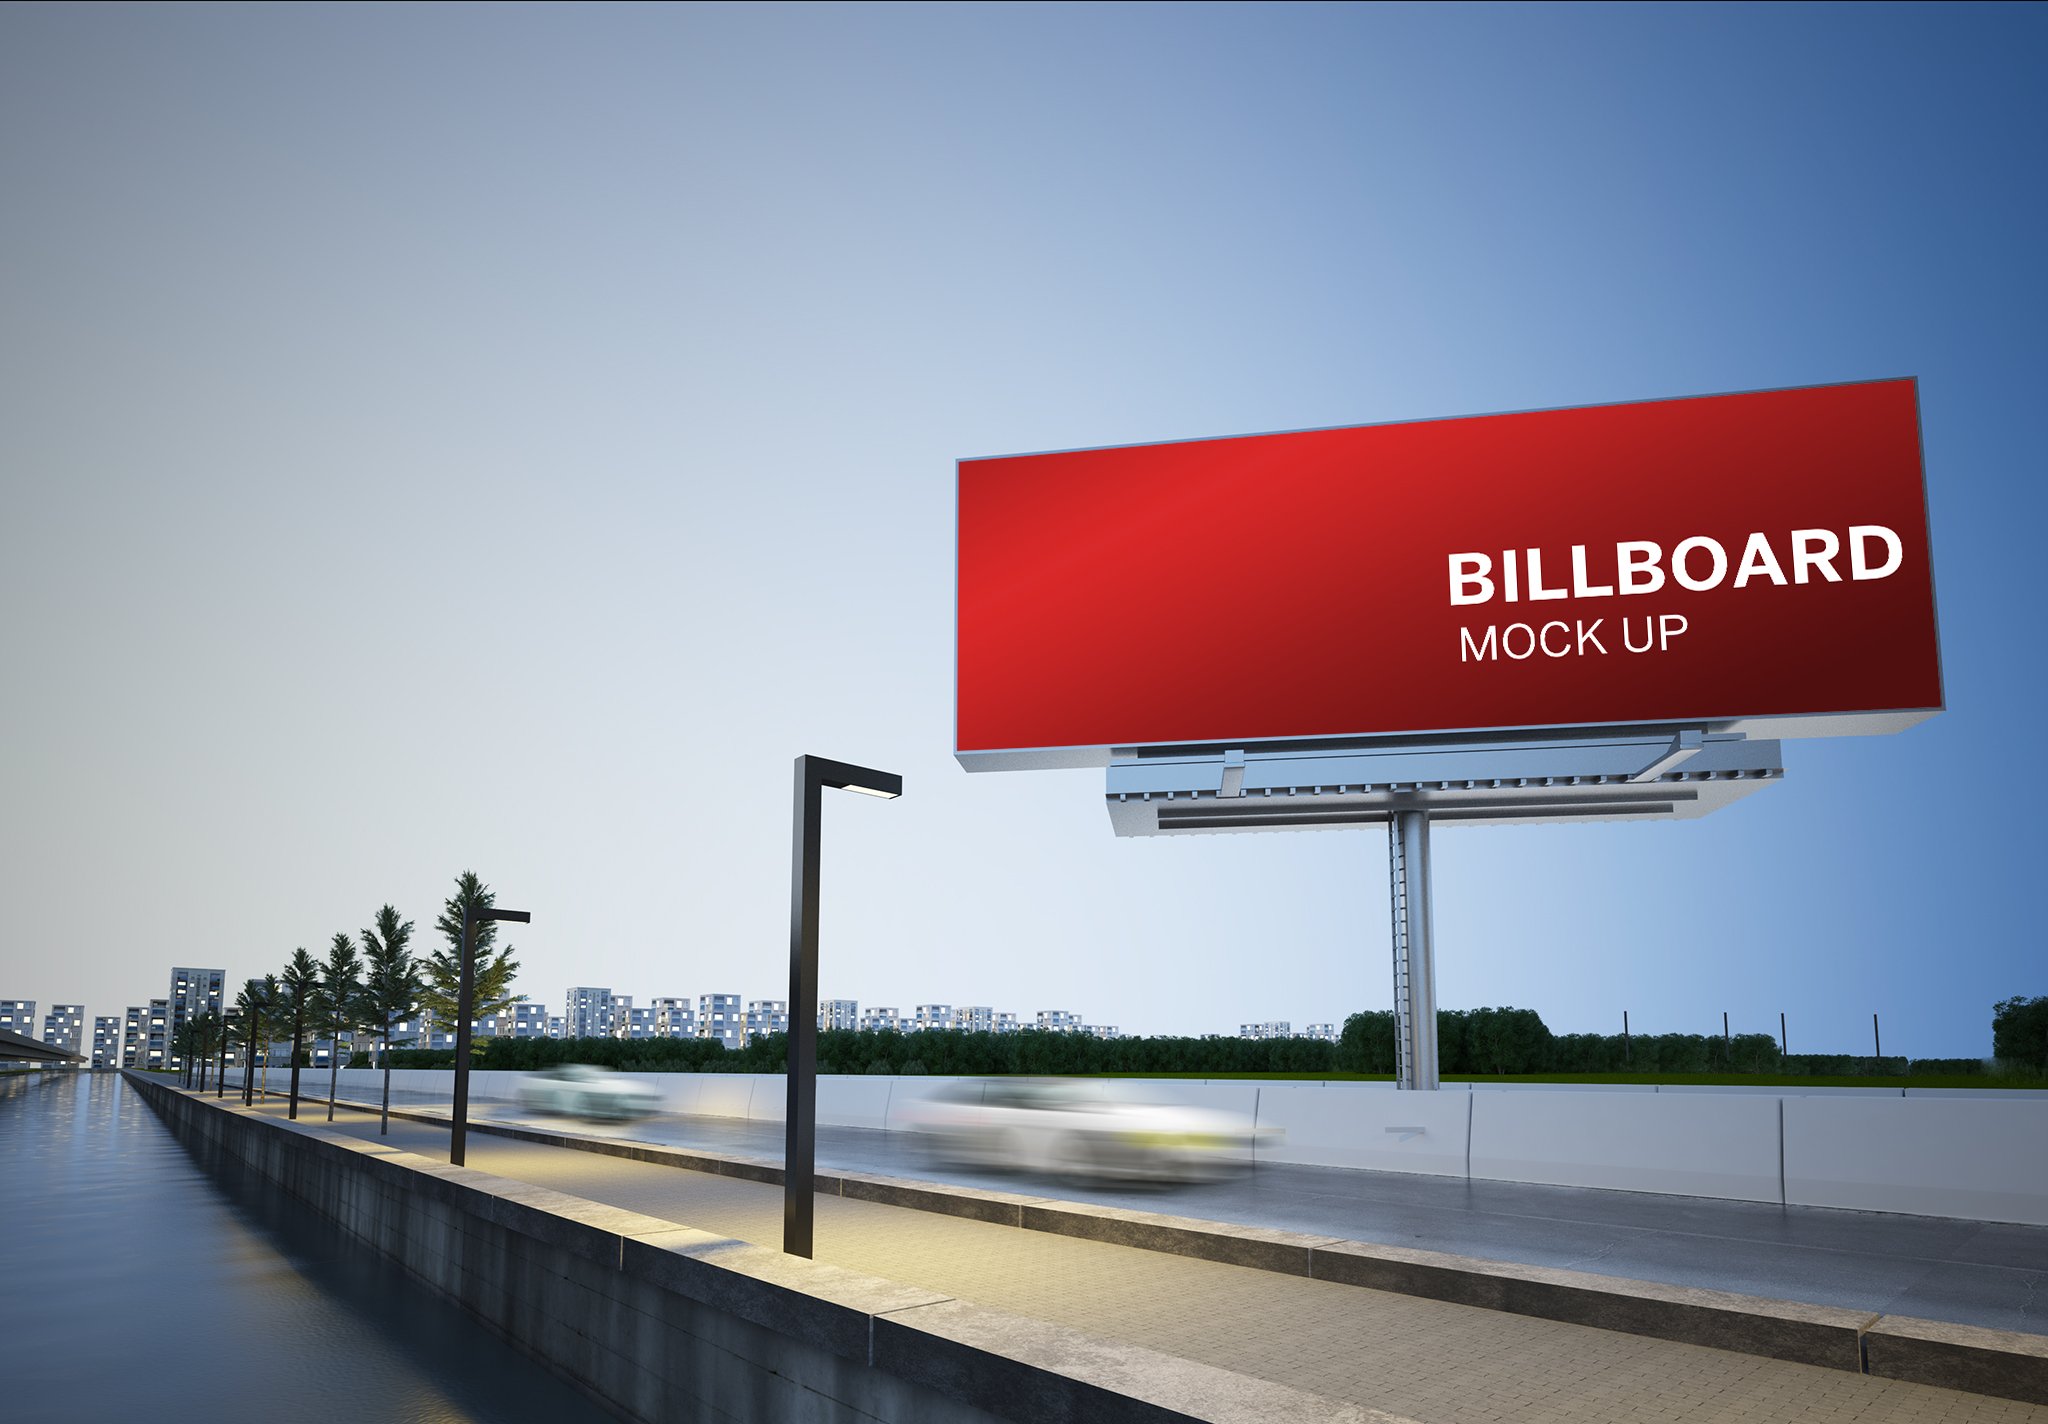 Billboard Mockup on Highway cover image.